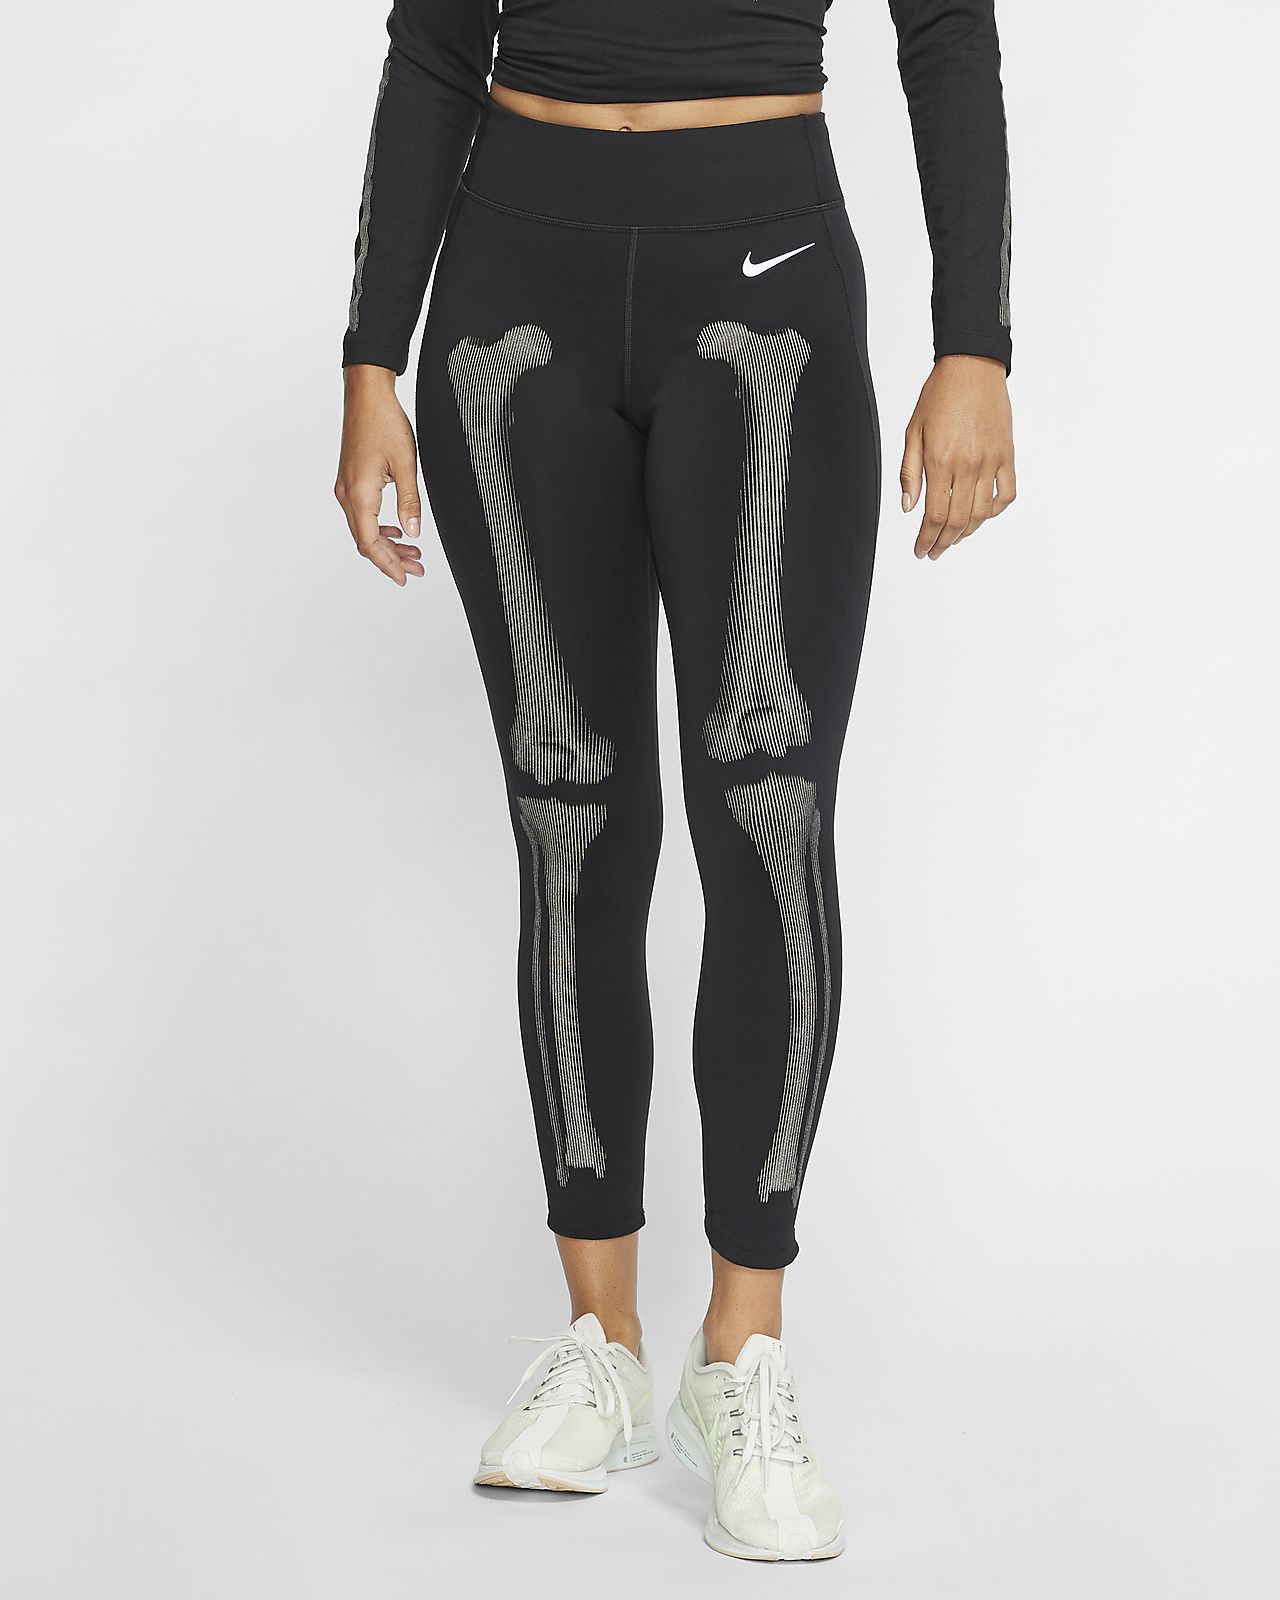 Best Nike skeleton workout pants for Push Pull Legs